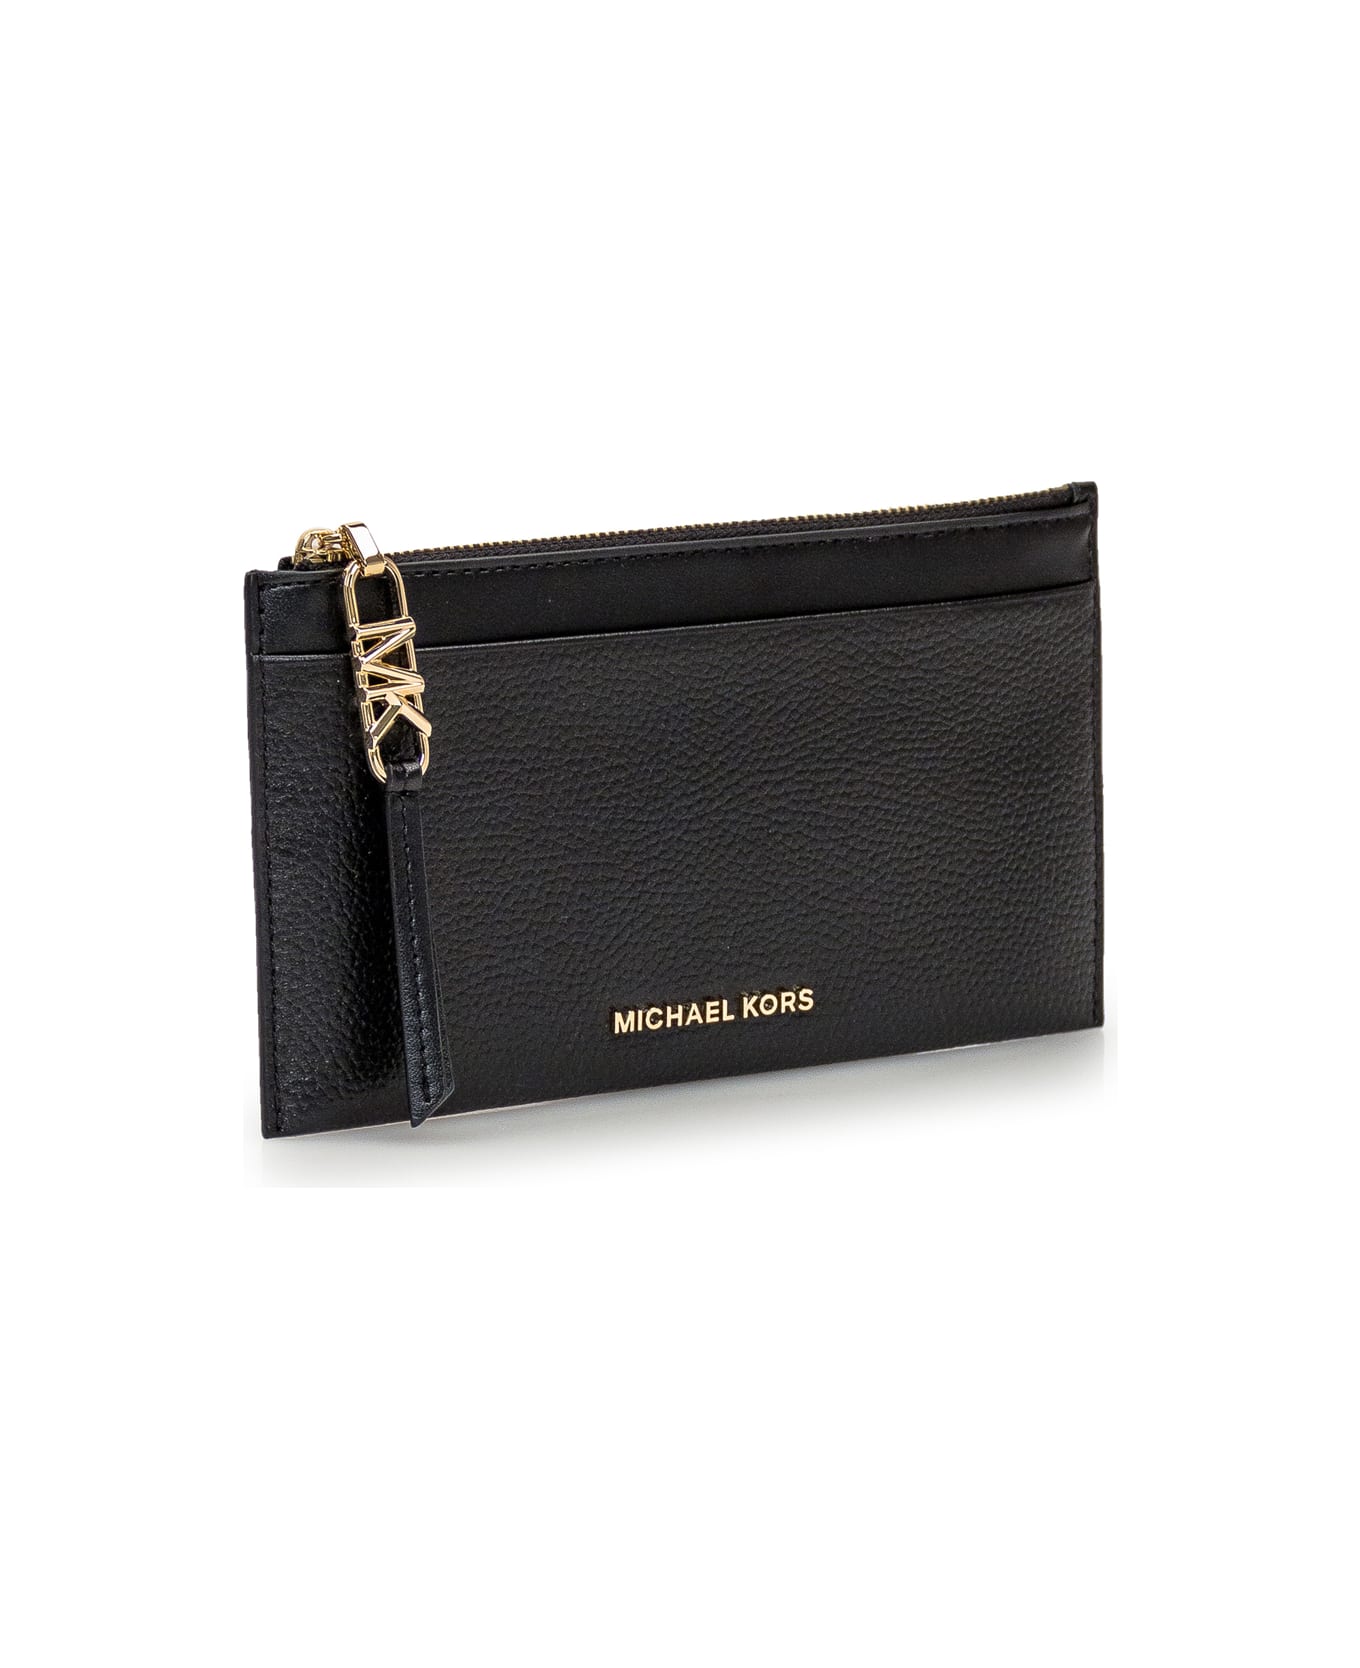 Michael Kors Collection Wallet - Black